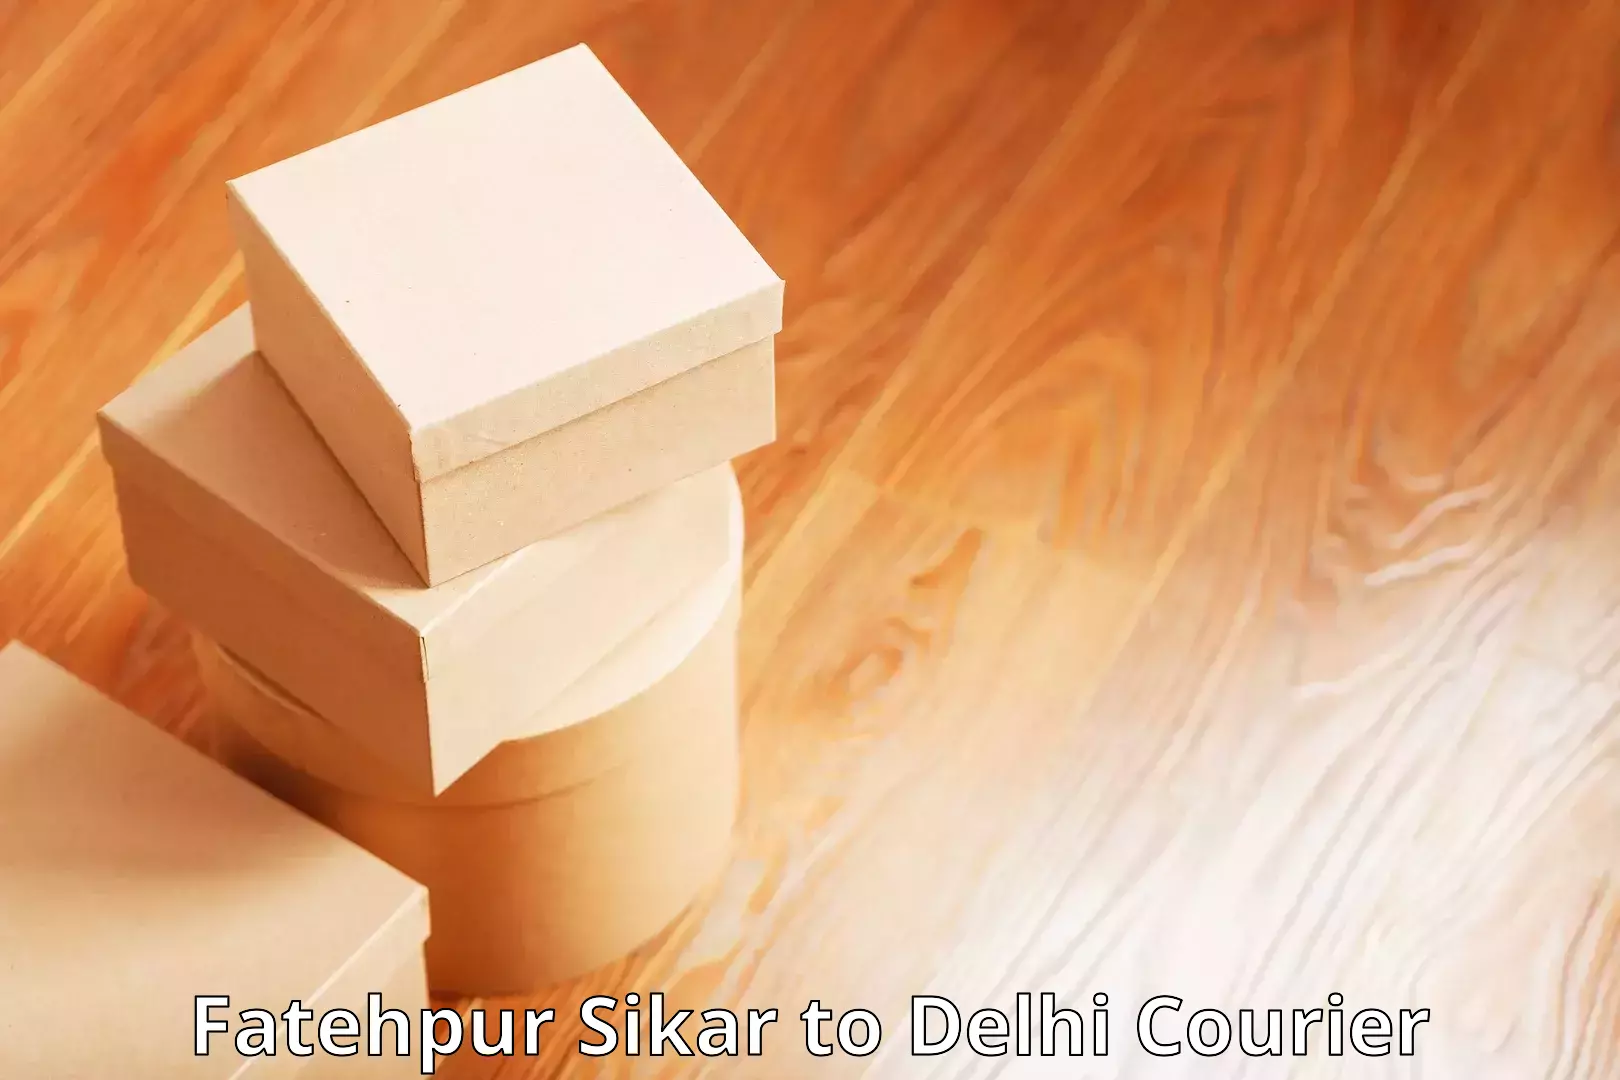 High-speed parcel service Fatehpur Sikar to Delhi